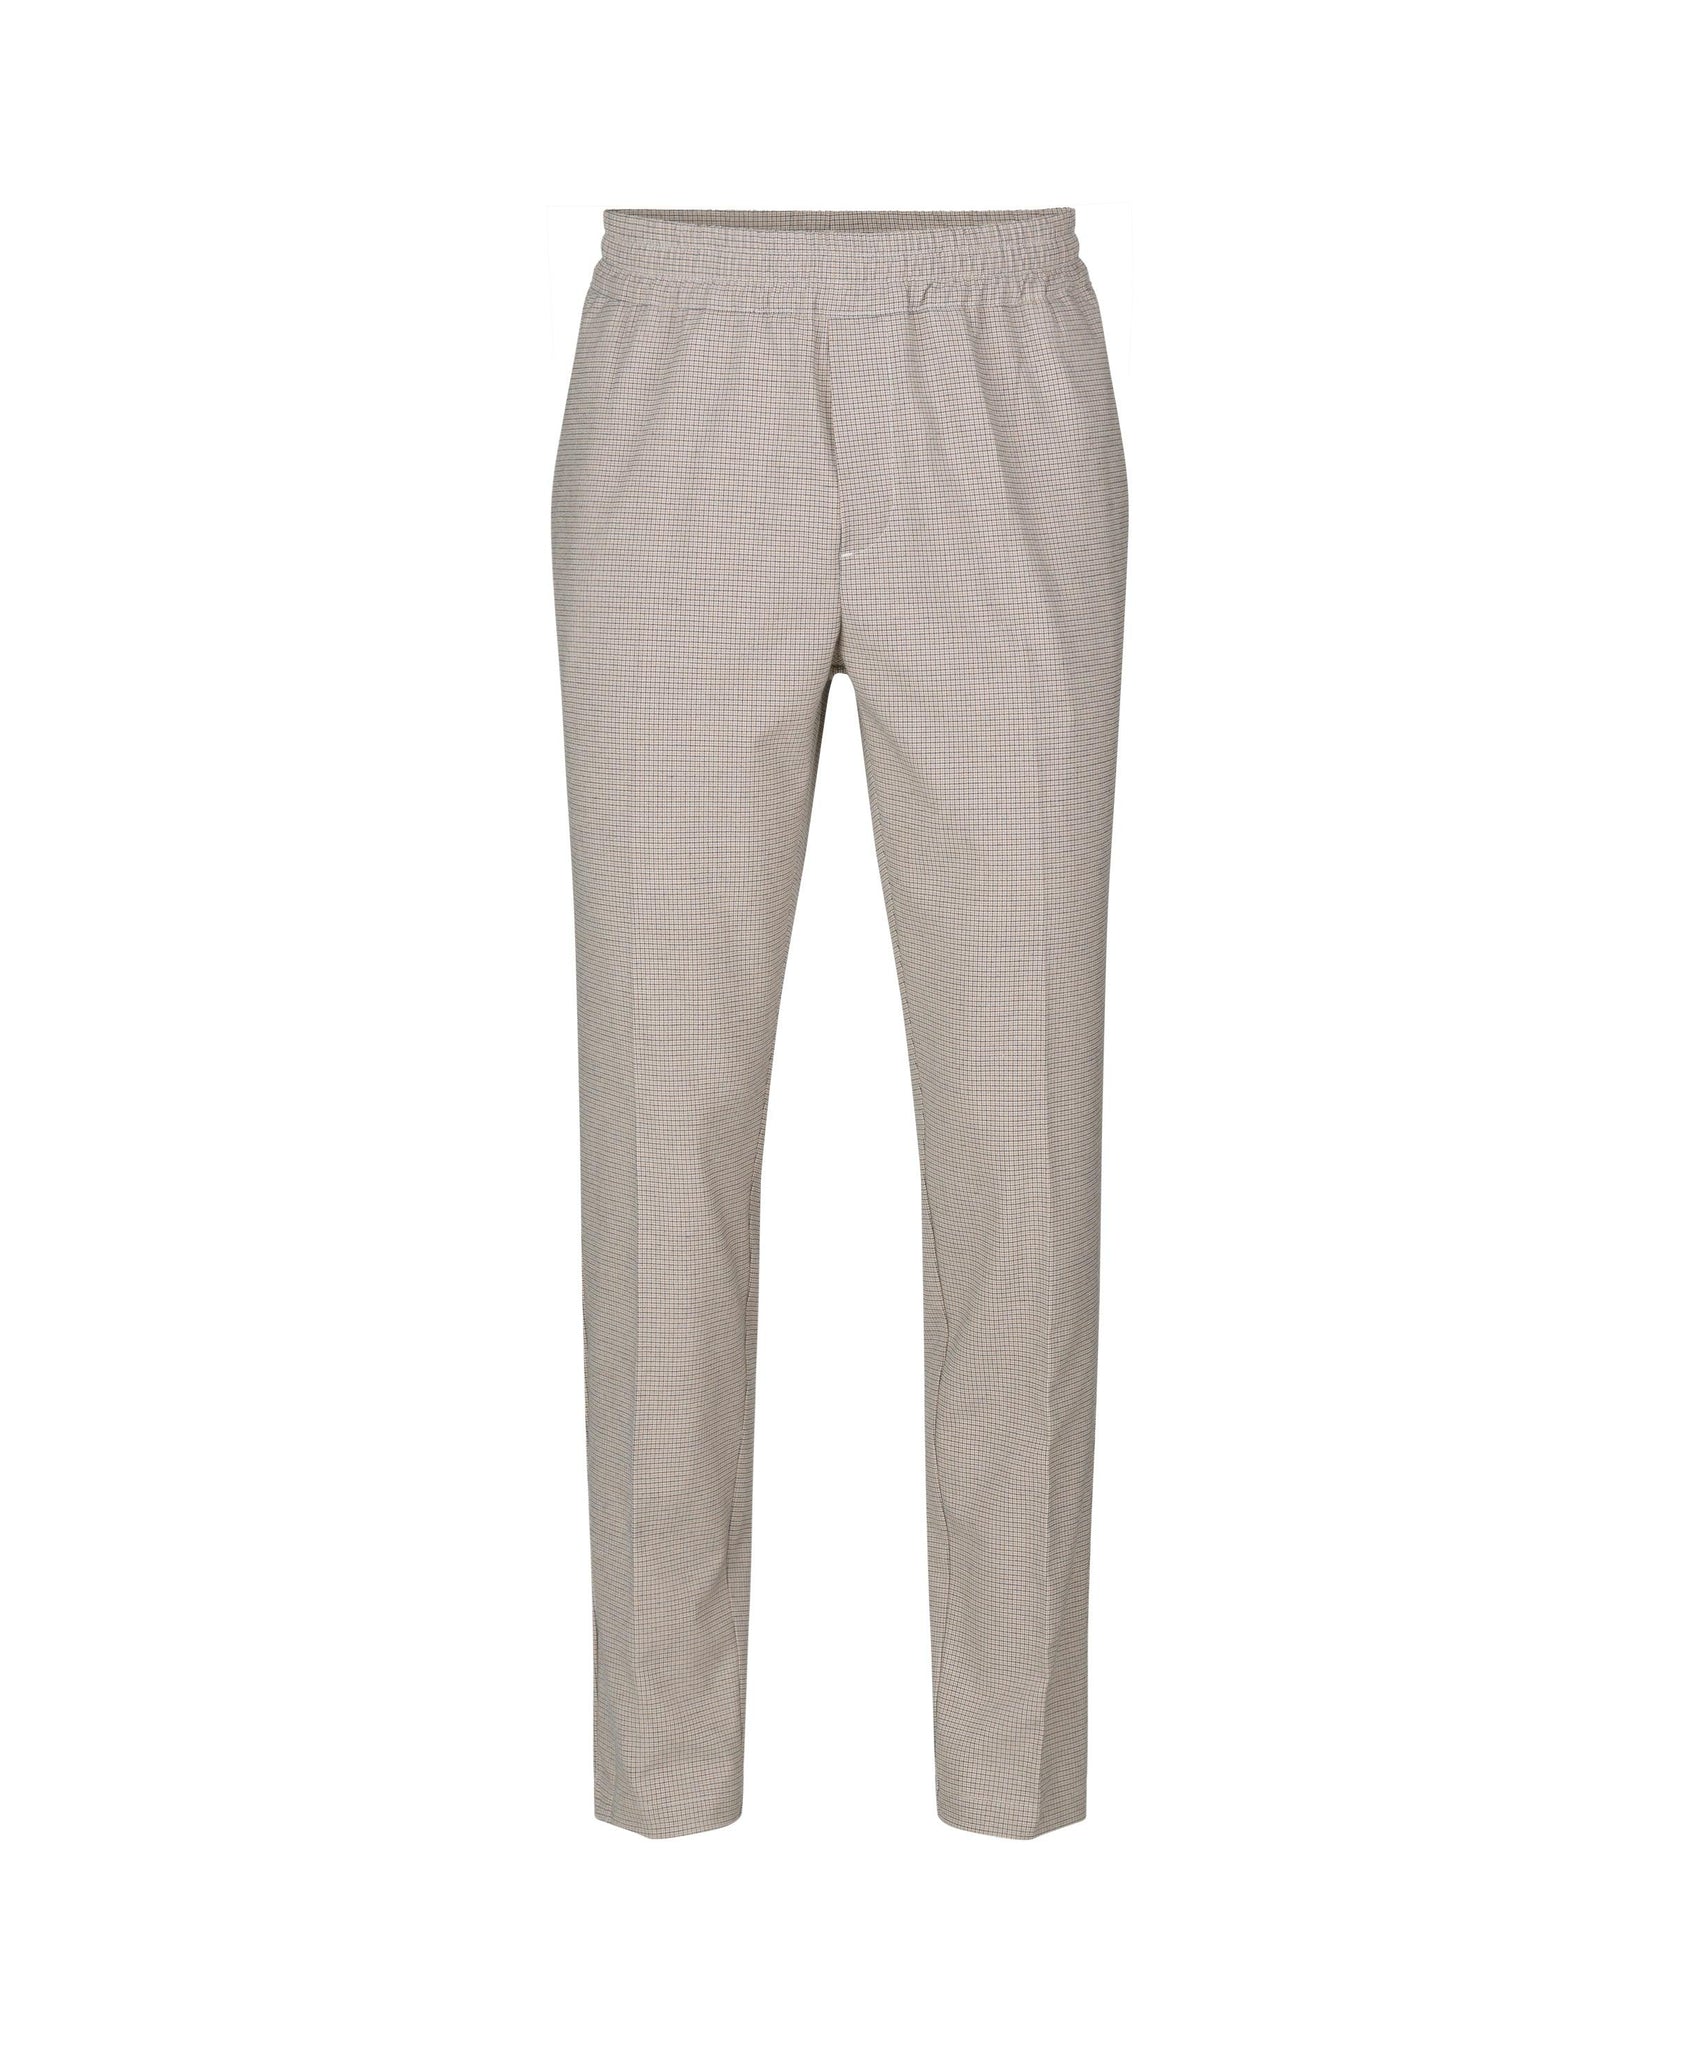 Pantalones Smithy 13079 - ECRU